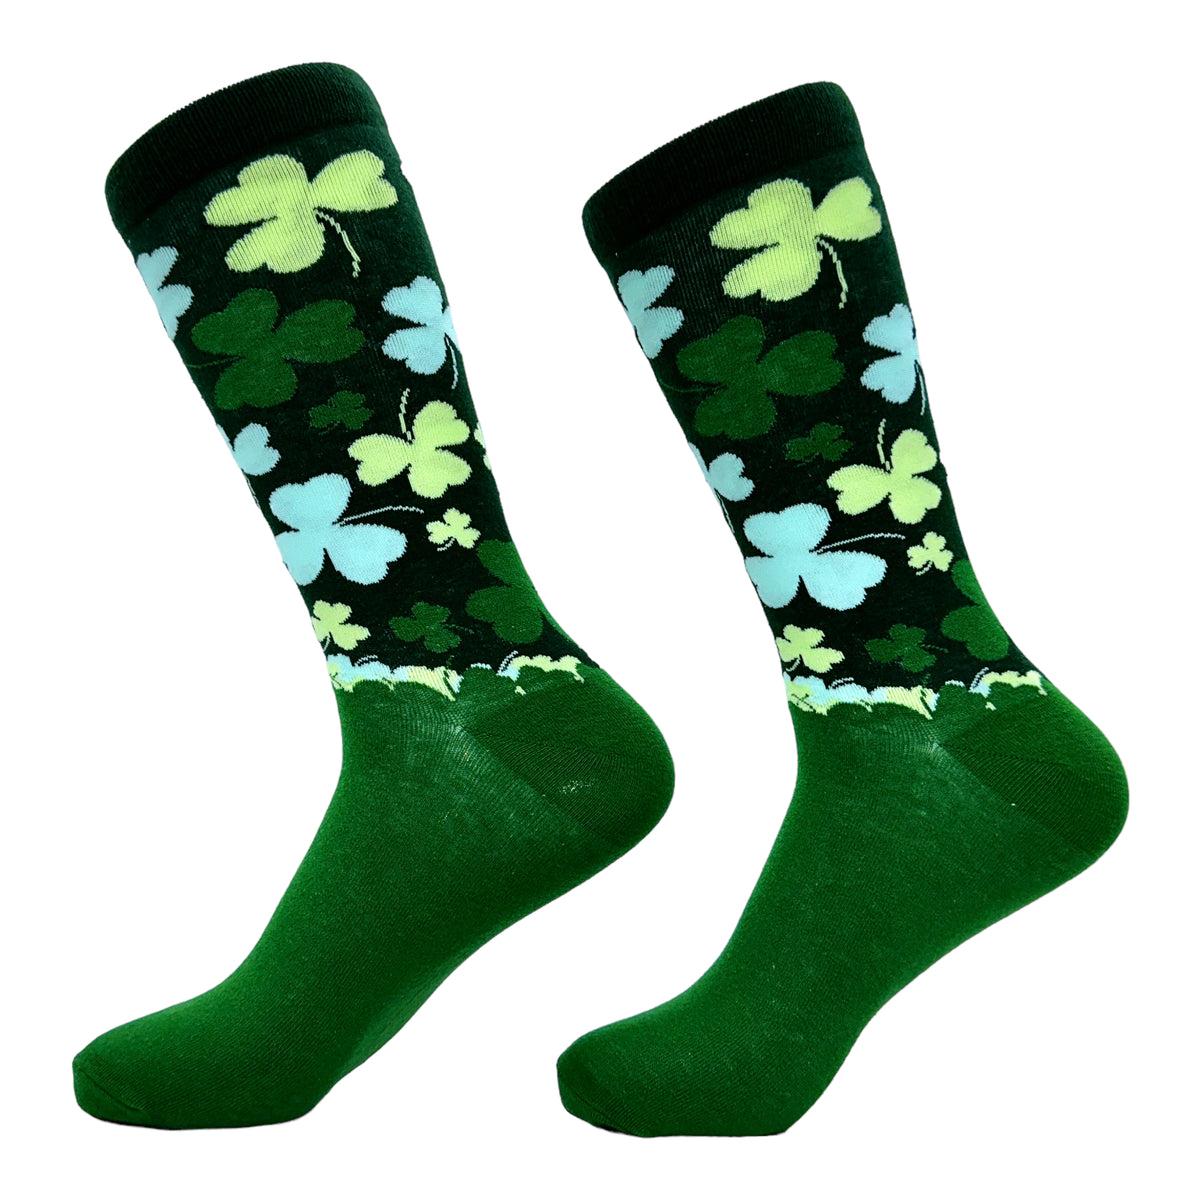 Mens Funny Socks Falling Clovers St Patricks Day Novelty Socks For Men (Falling Clovers) - Mens (9-11)